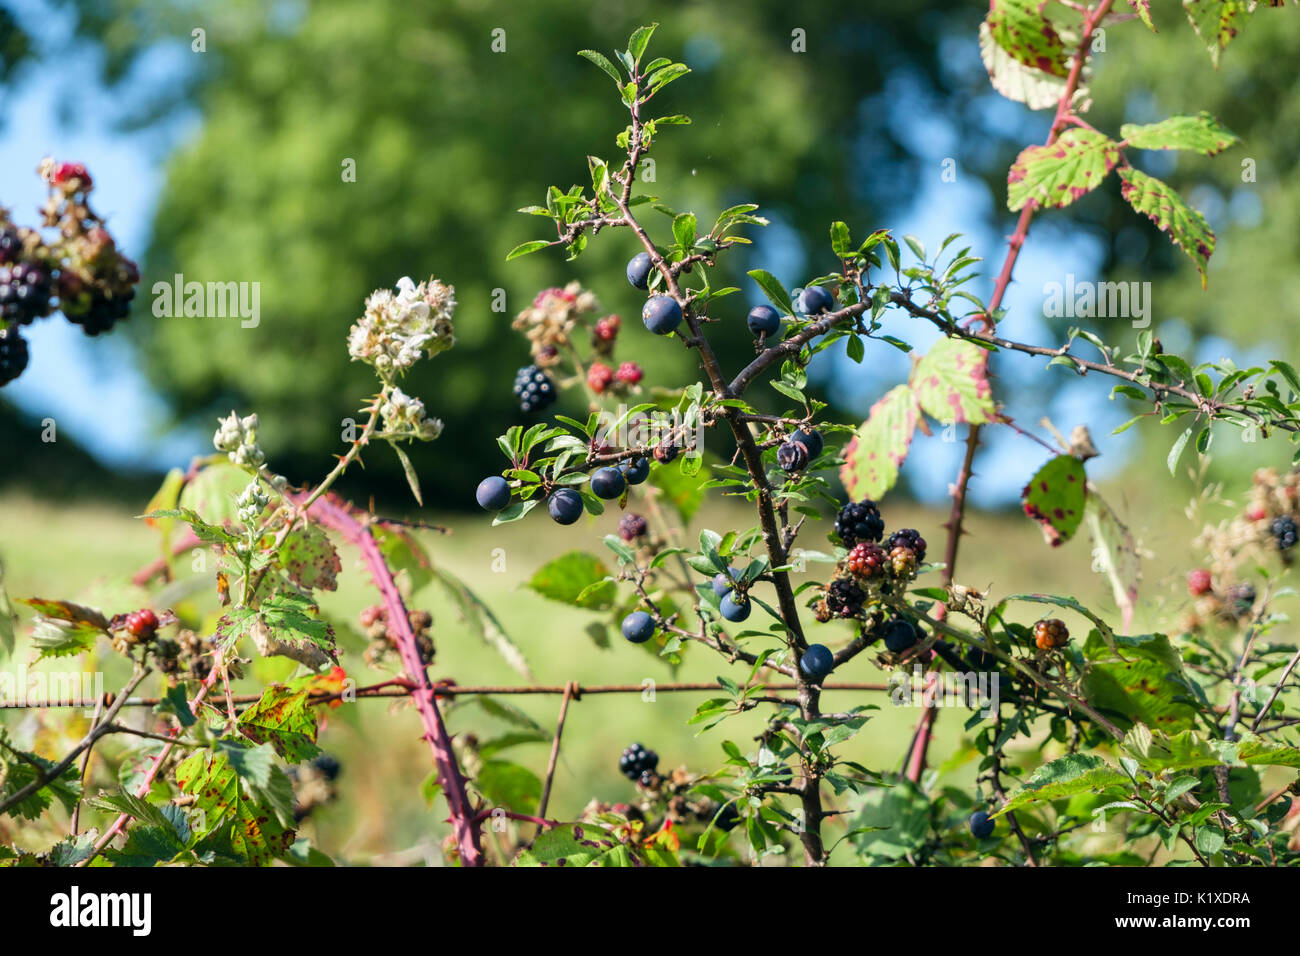 Pruno selvatico (Prunus spinosa prugnoli e More (Rubus fruticosus) in crescita in un paese siepe recinzione in tarda estate. Wales UK Gran Bretagna Foto Stock